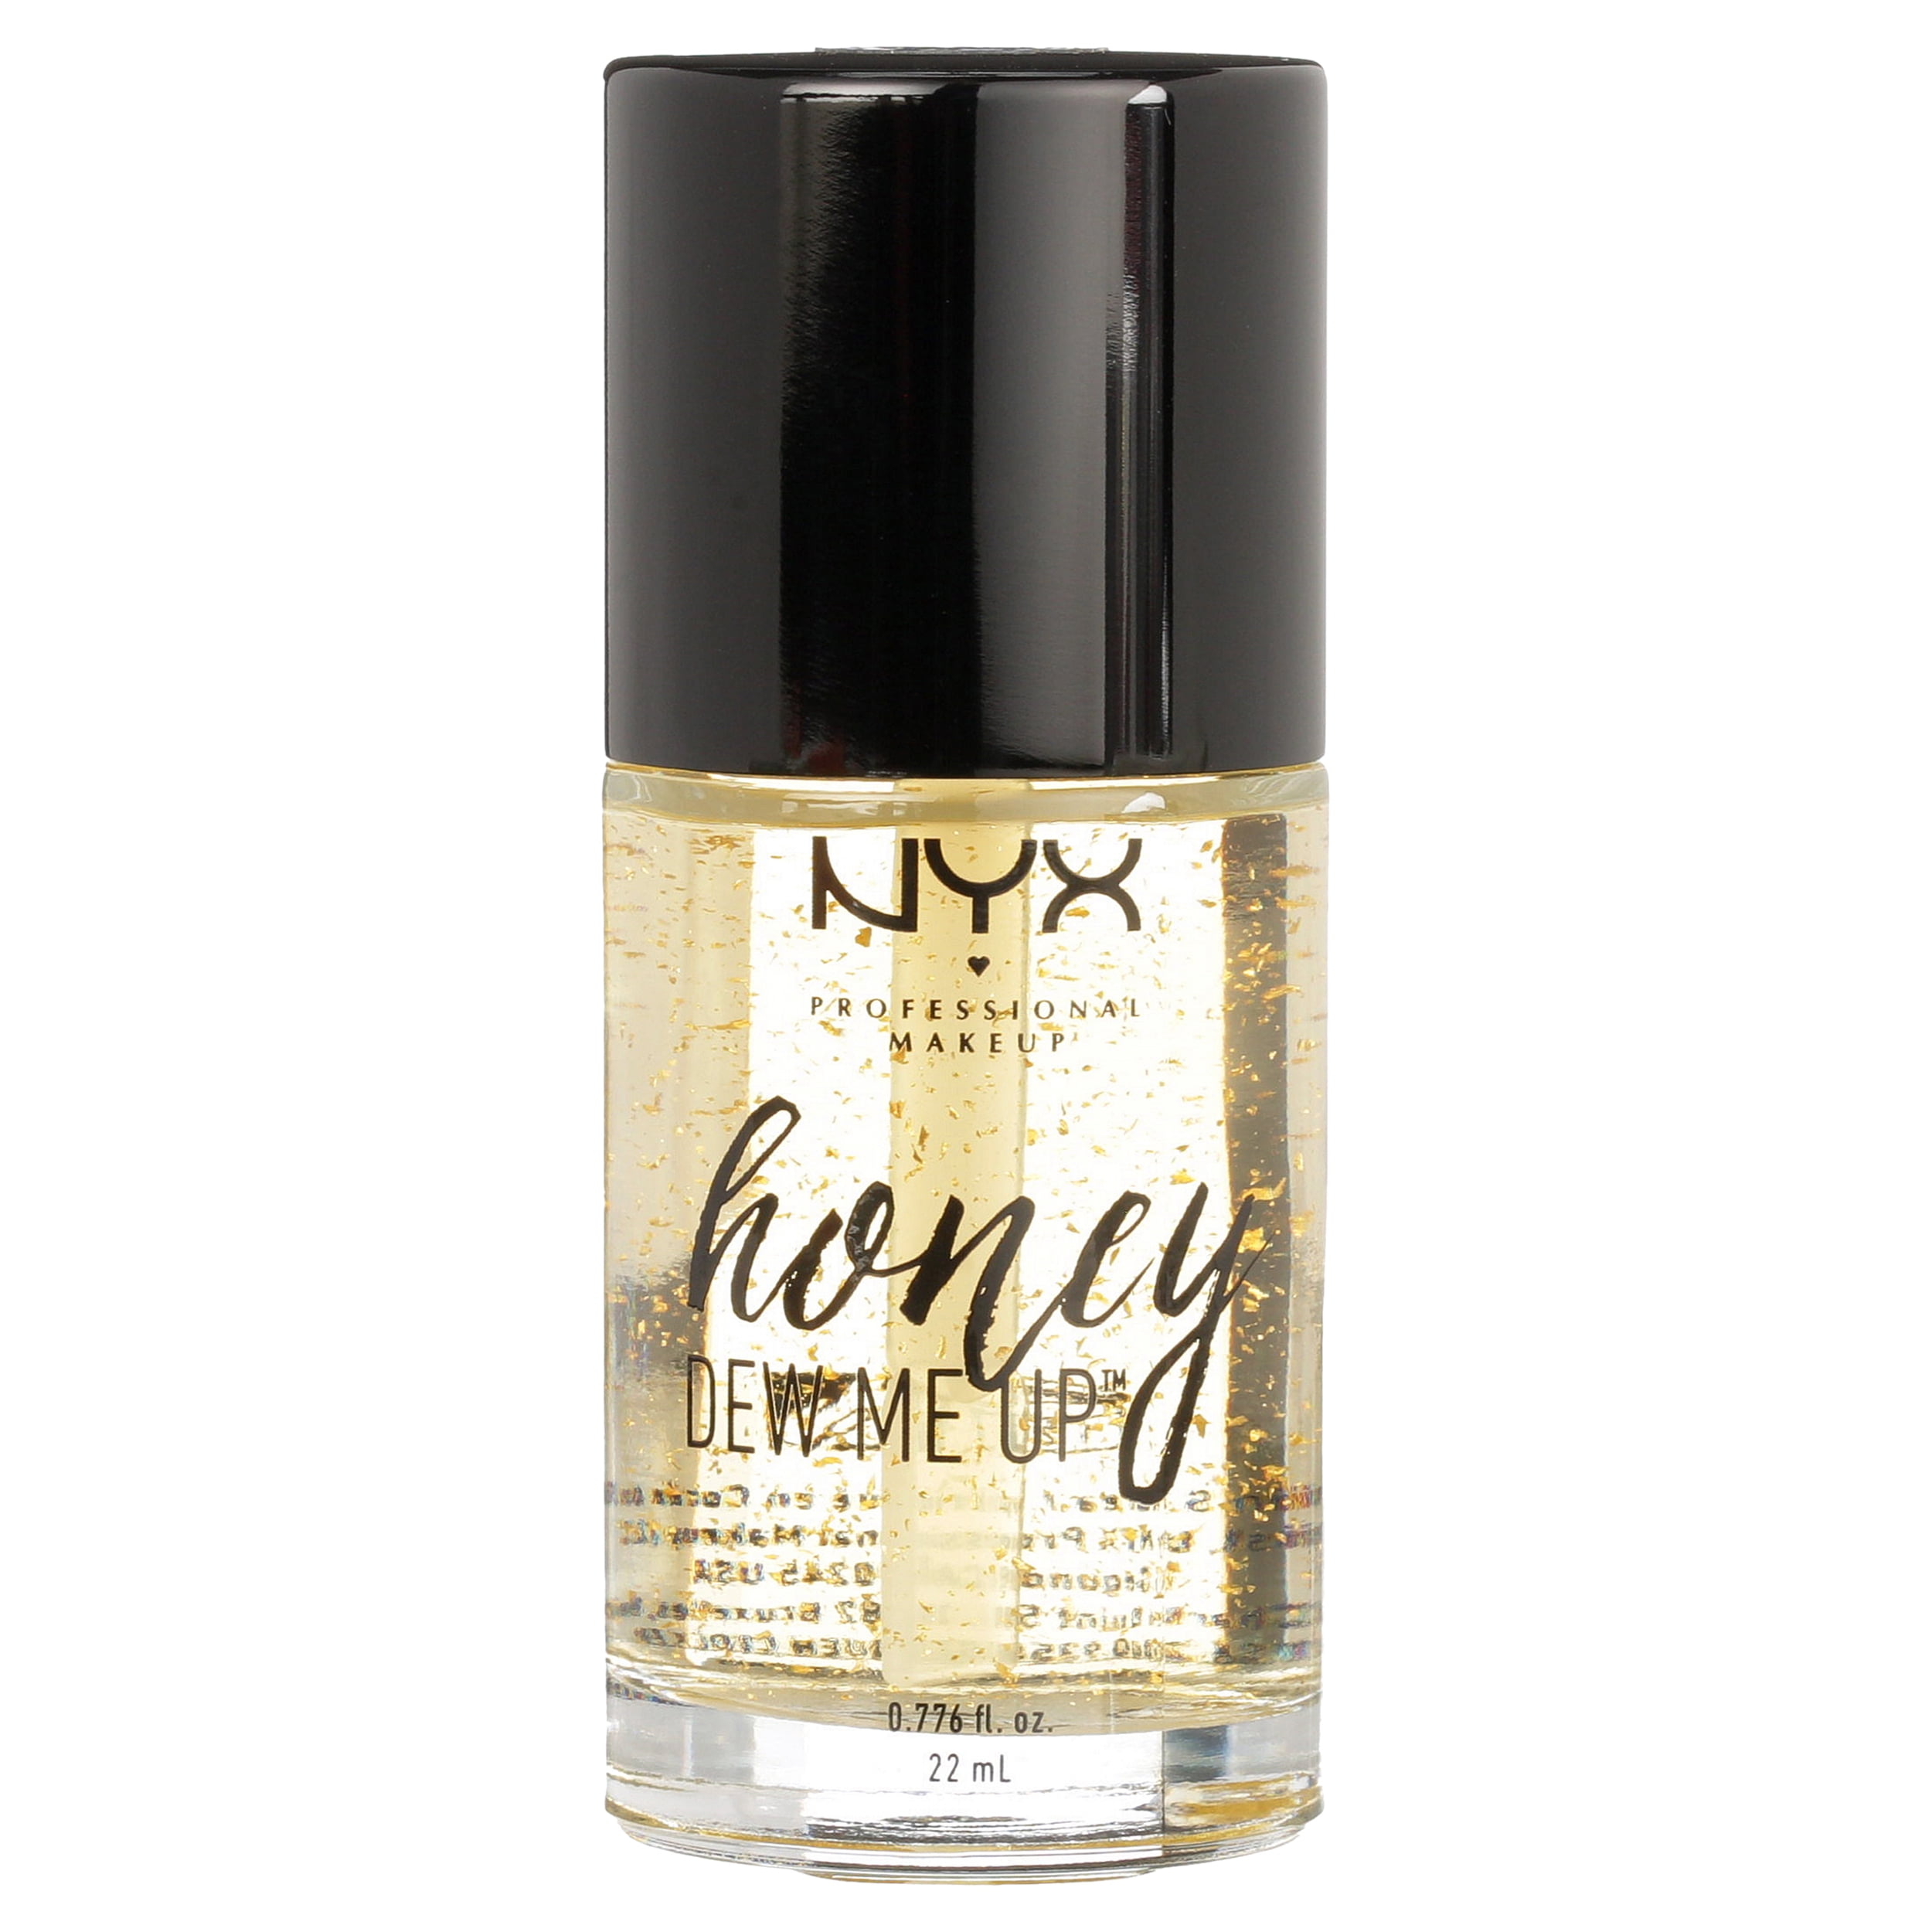 NYX Professional Makeup Honey Dew Me Up Primer